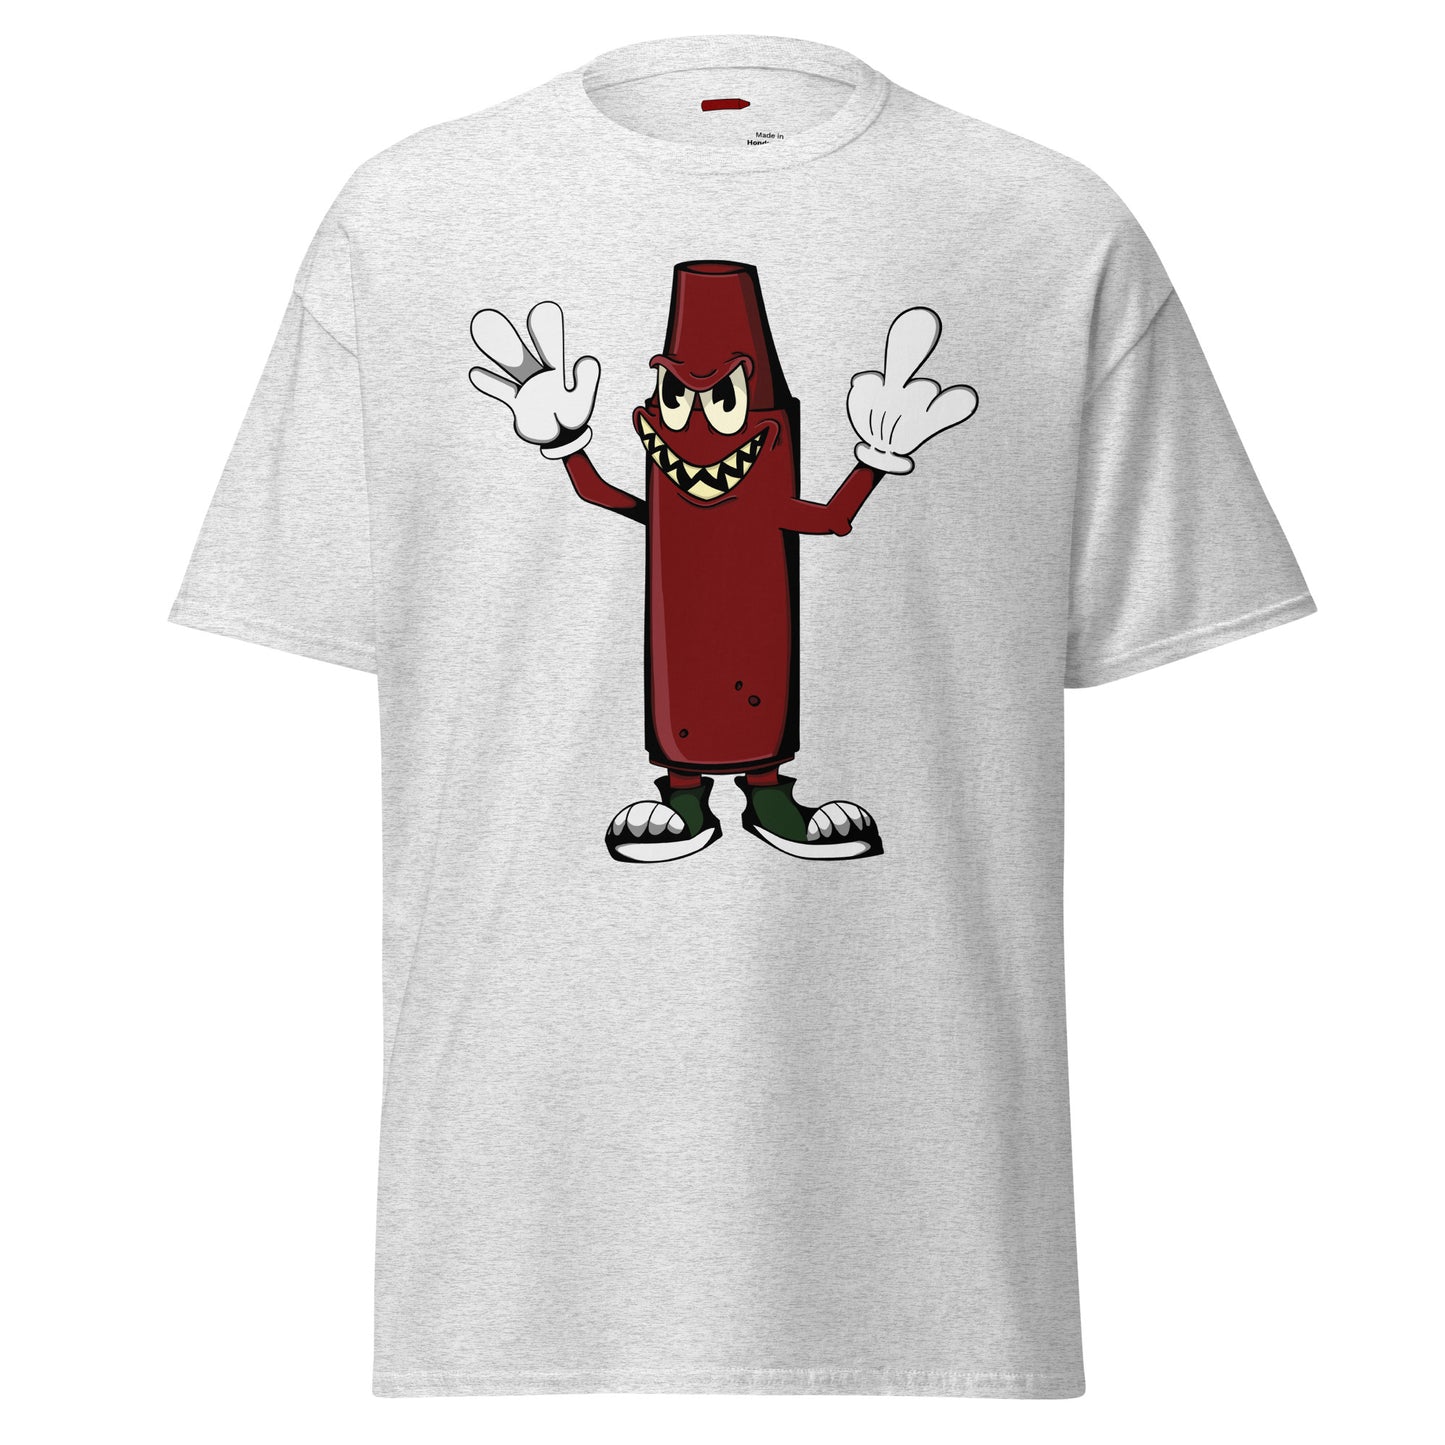 Bloody da crayon - Men's T-Shirt